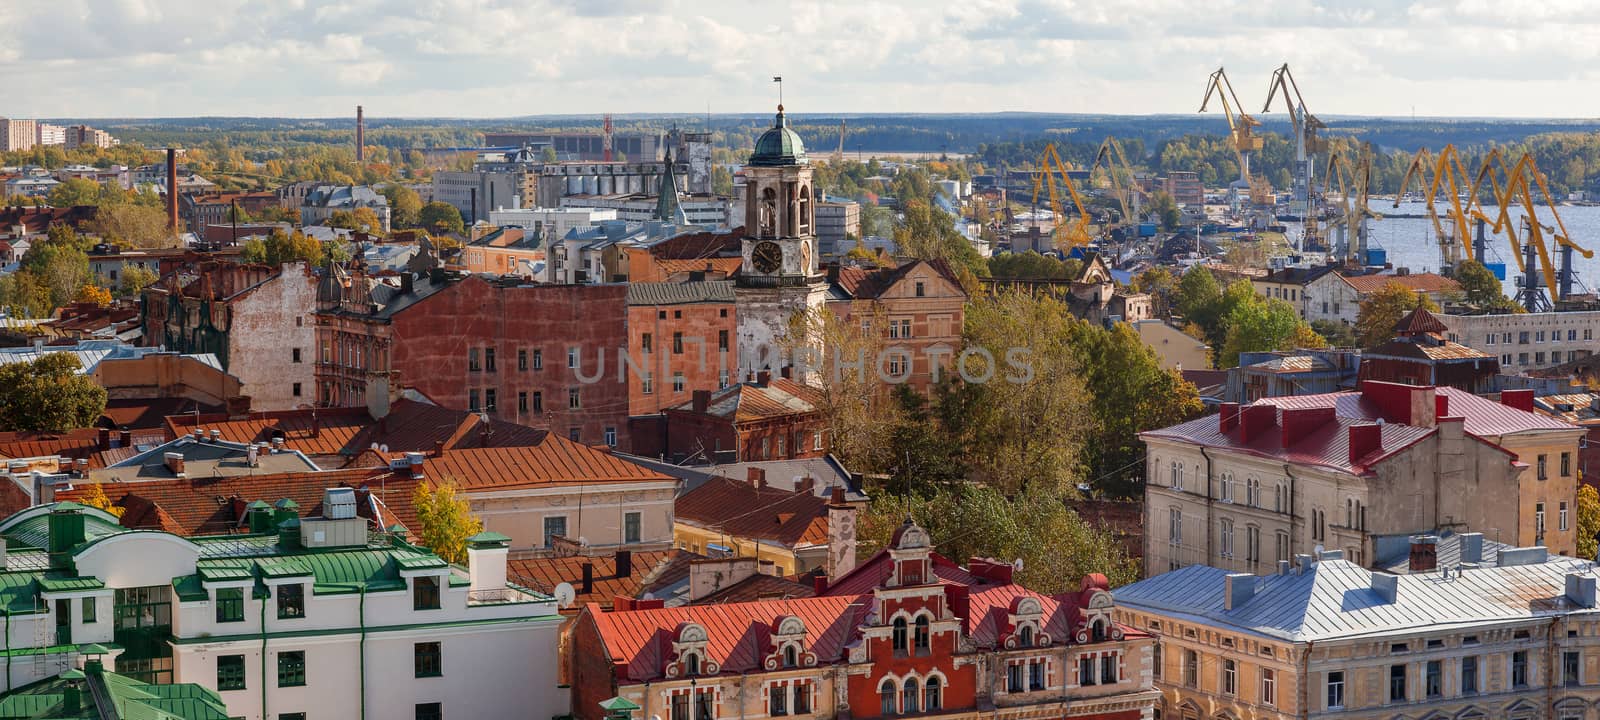 Vyborg (Viipuri), panorama view in sunny autumn day. Russia.